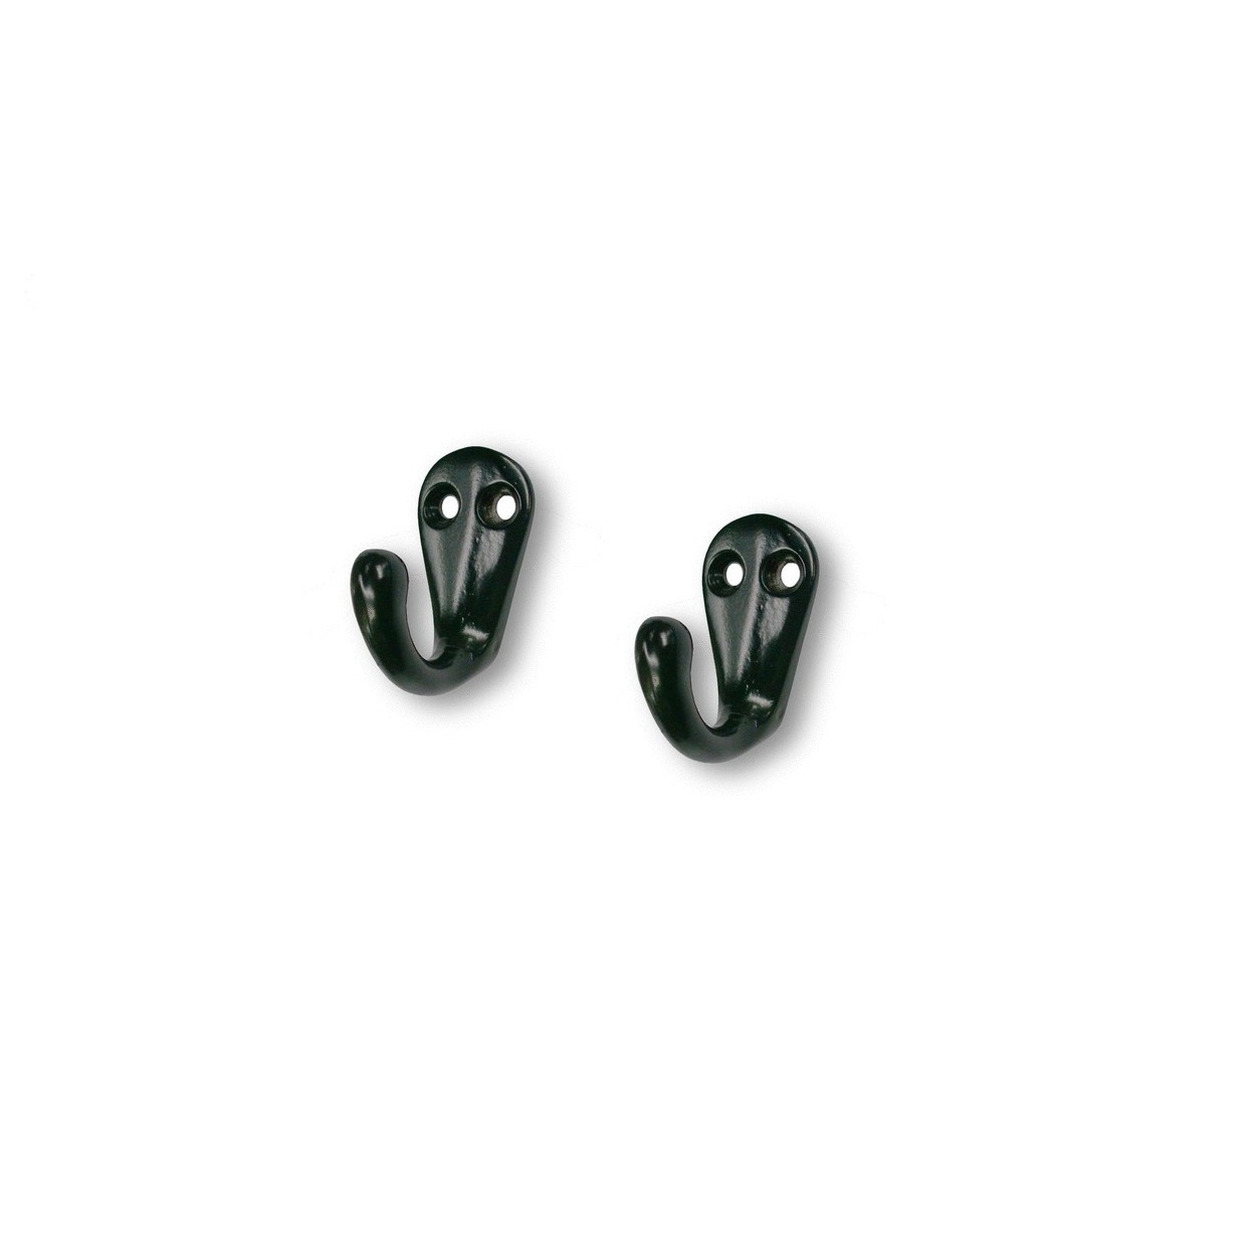 3x Luxe kapstokhaken-jashaken-kapstokhaakjes zwart van hoogwaardig metaal 3,3 x 4,1 cm